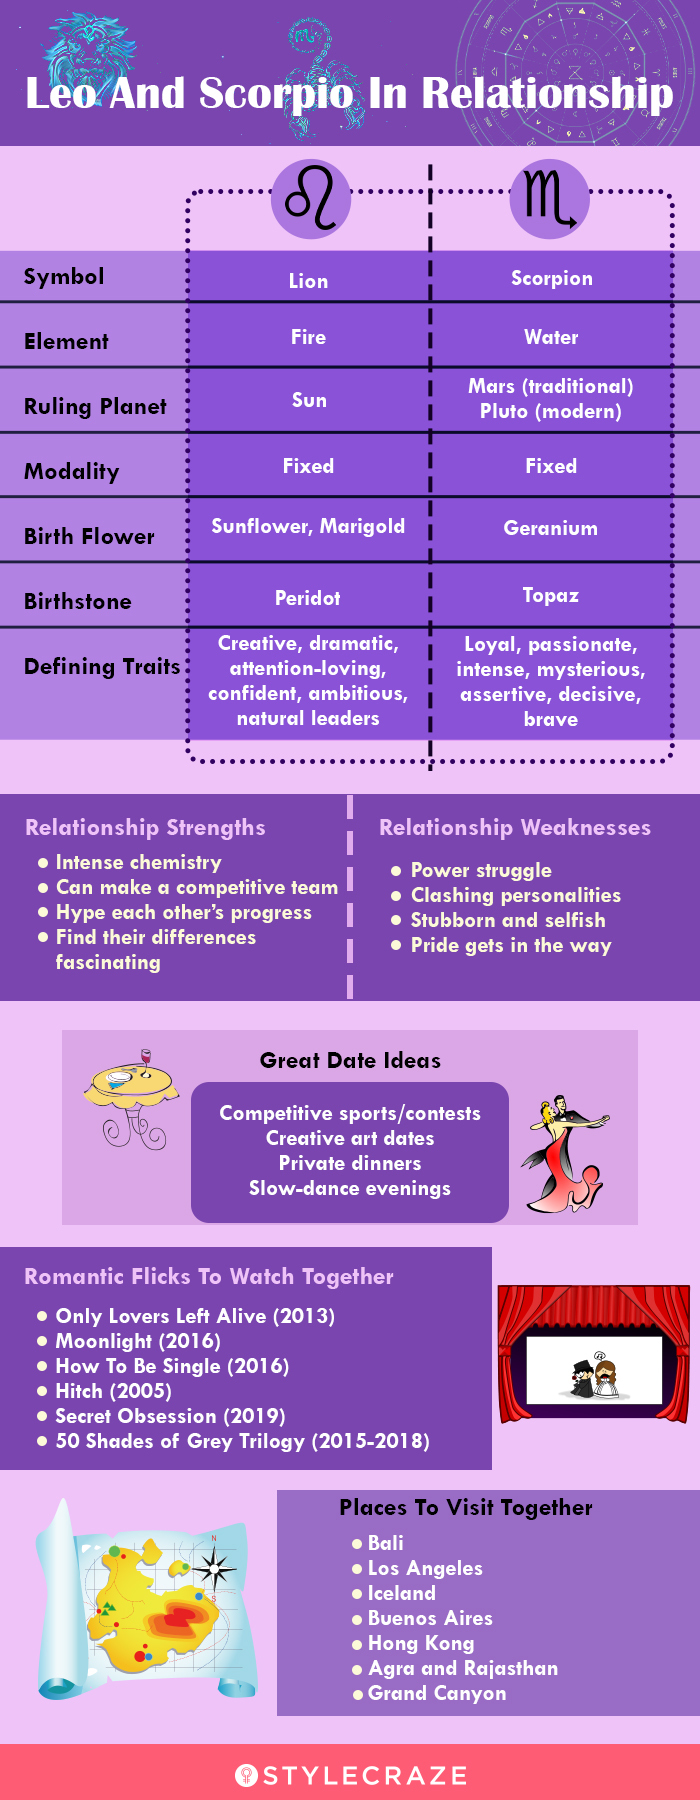 leo and scorpio in relationship [infographic]